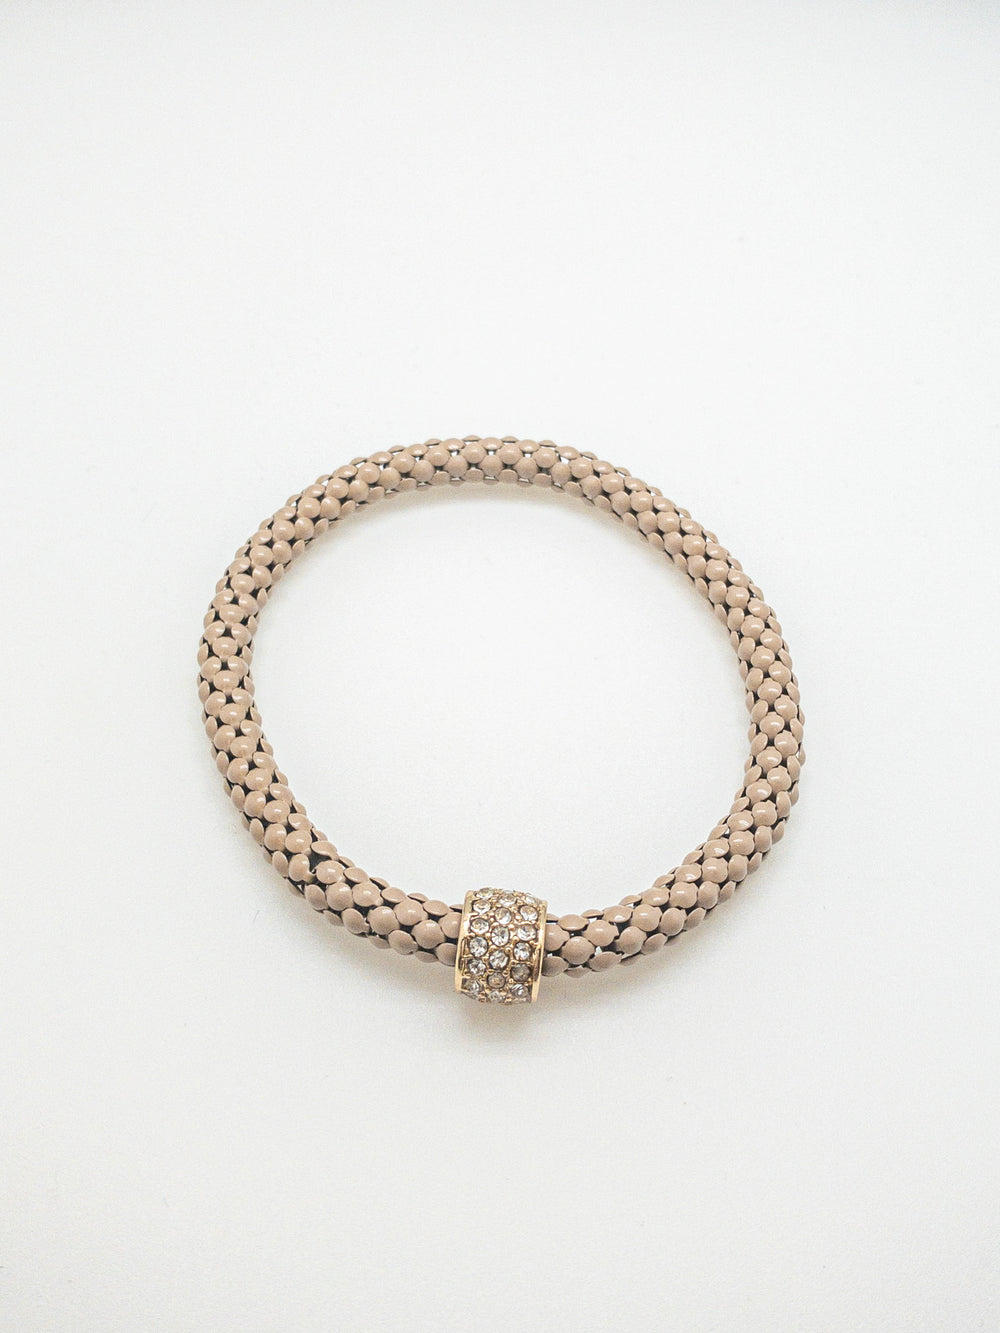 Scarlett taupe bracelet, tan interlocking chain with charm